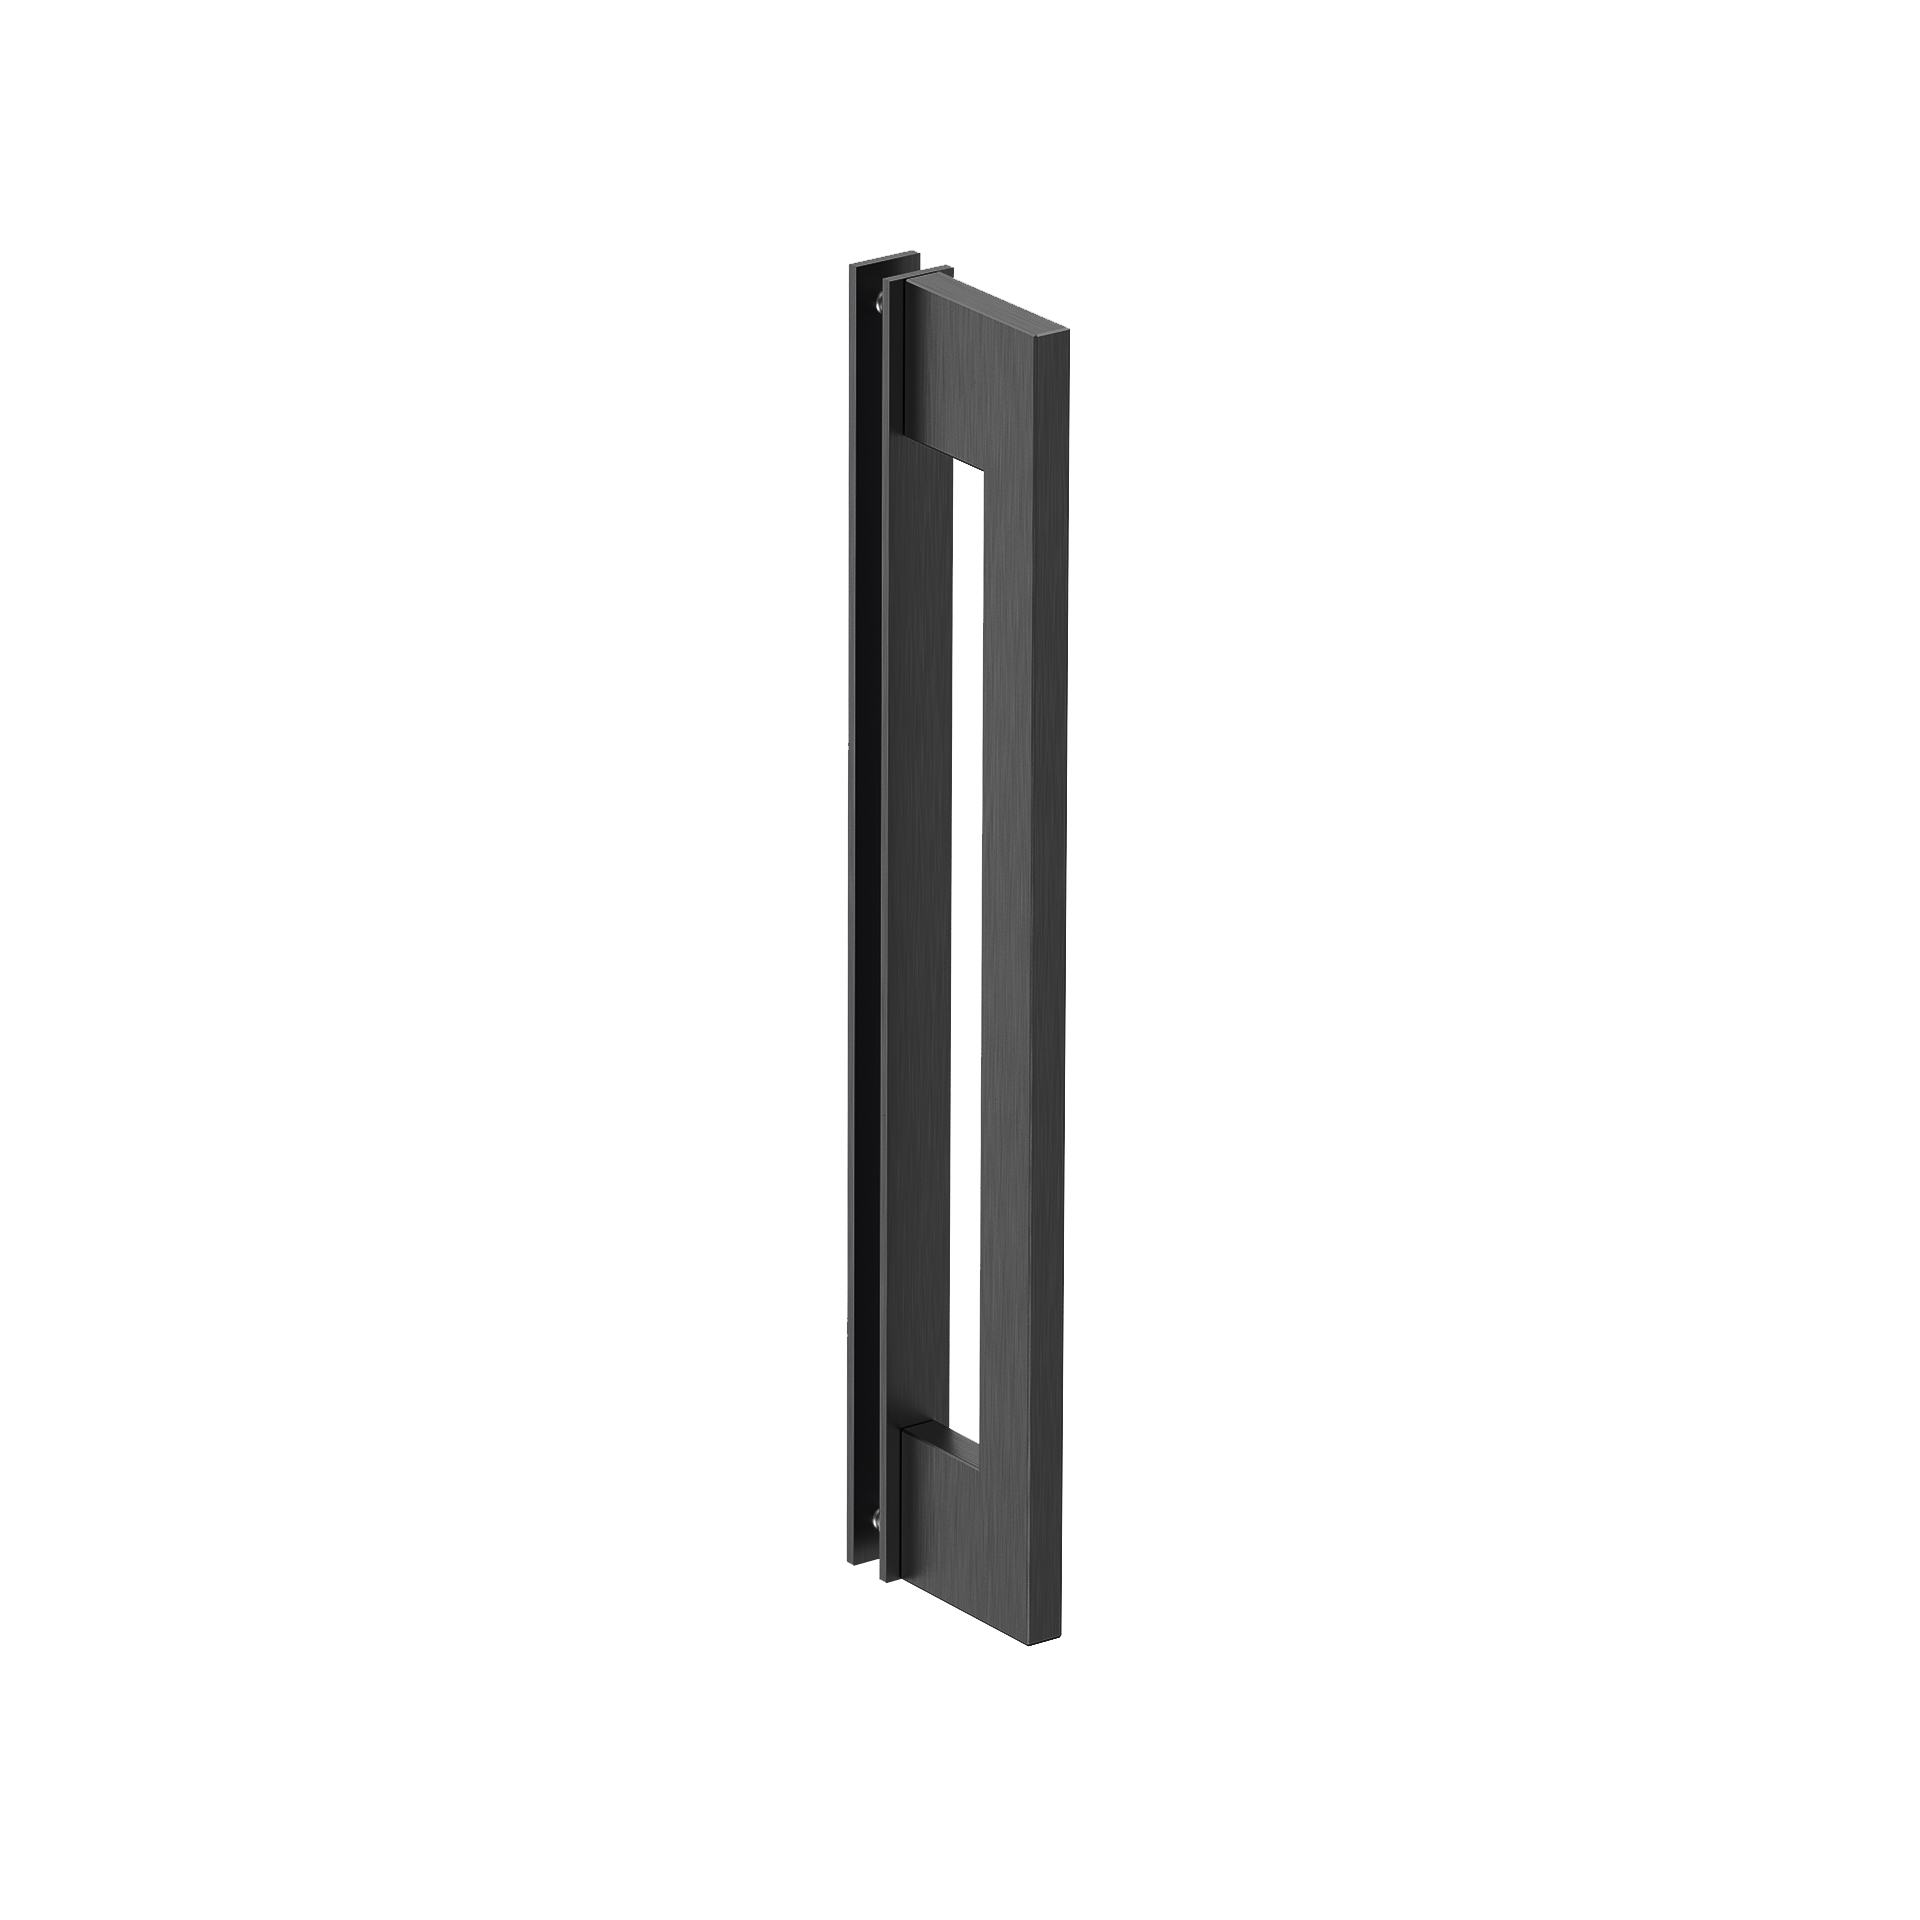 Tirador de puerta simple modelo - Titanium Black - IN.07.432.S.TB -  Abstracta Soluciones